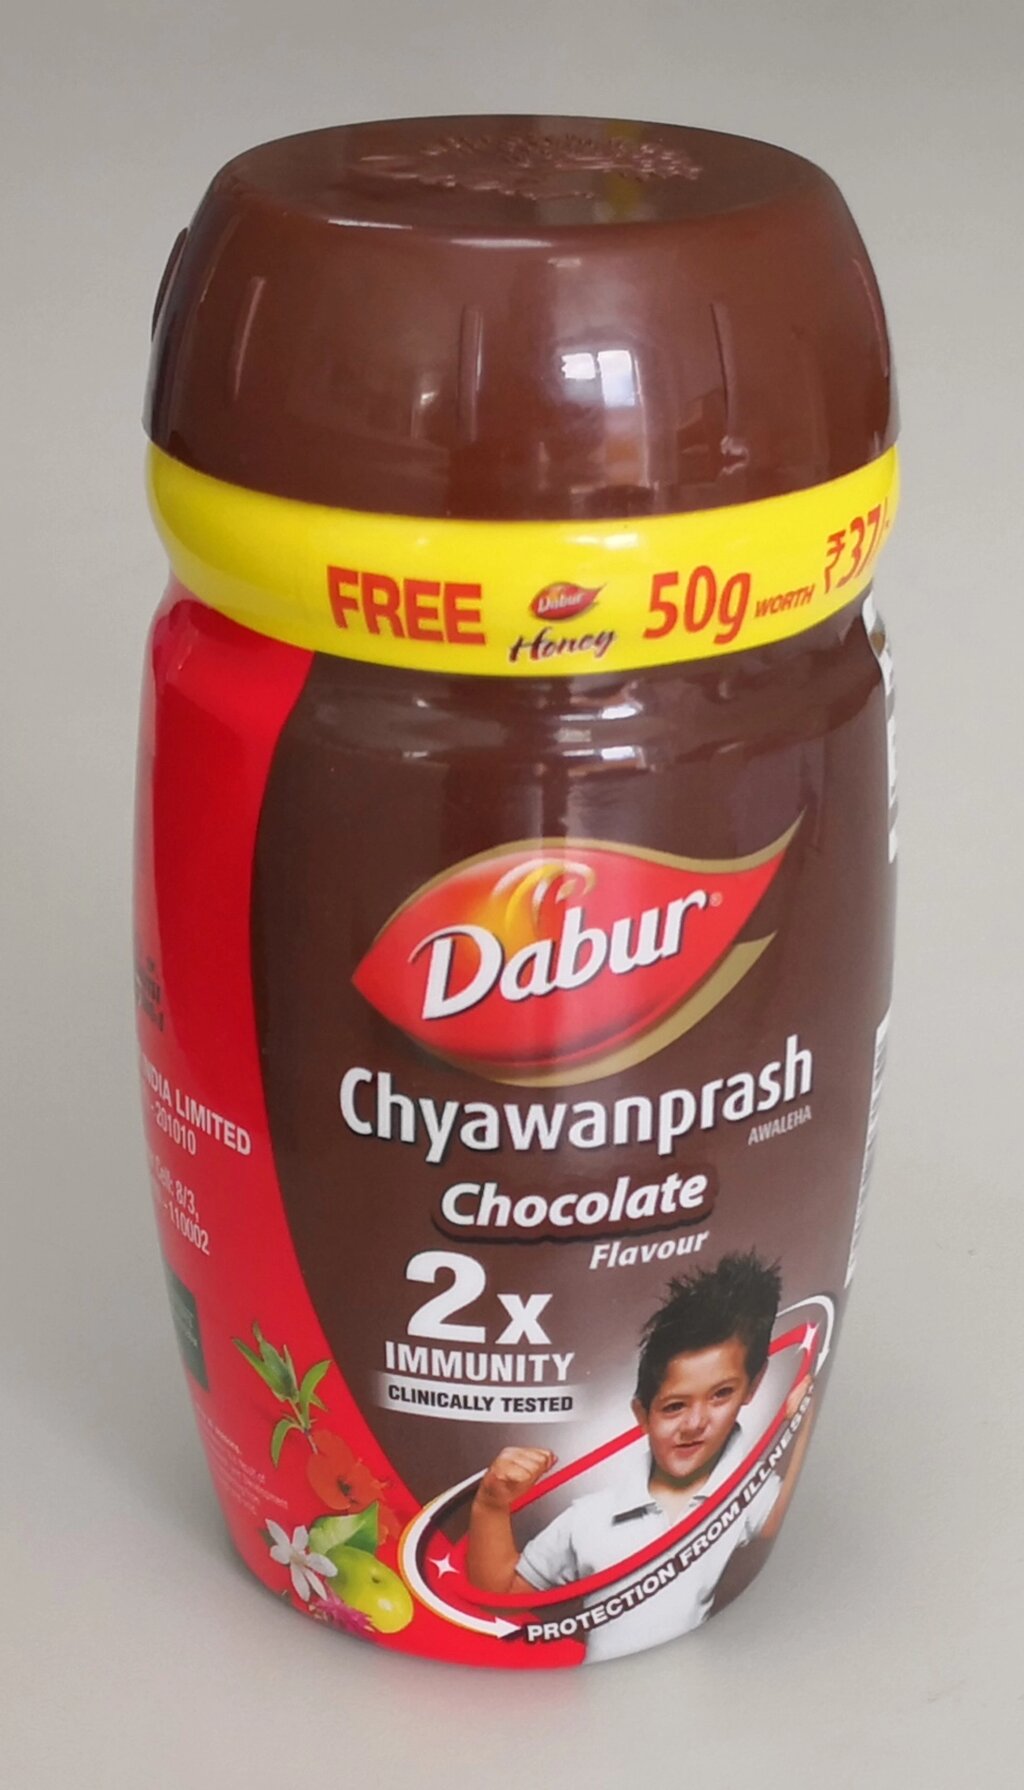 Dabur Chyawanprash Chocolate Чаванпраш шоколад Двойной иммунитет, 500г от компании Интернет-магазин ayurvedic by - фото 1